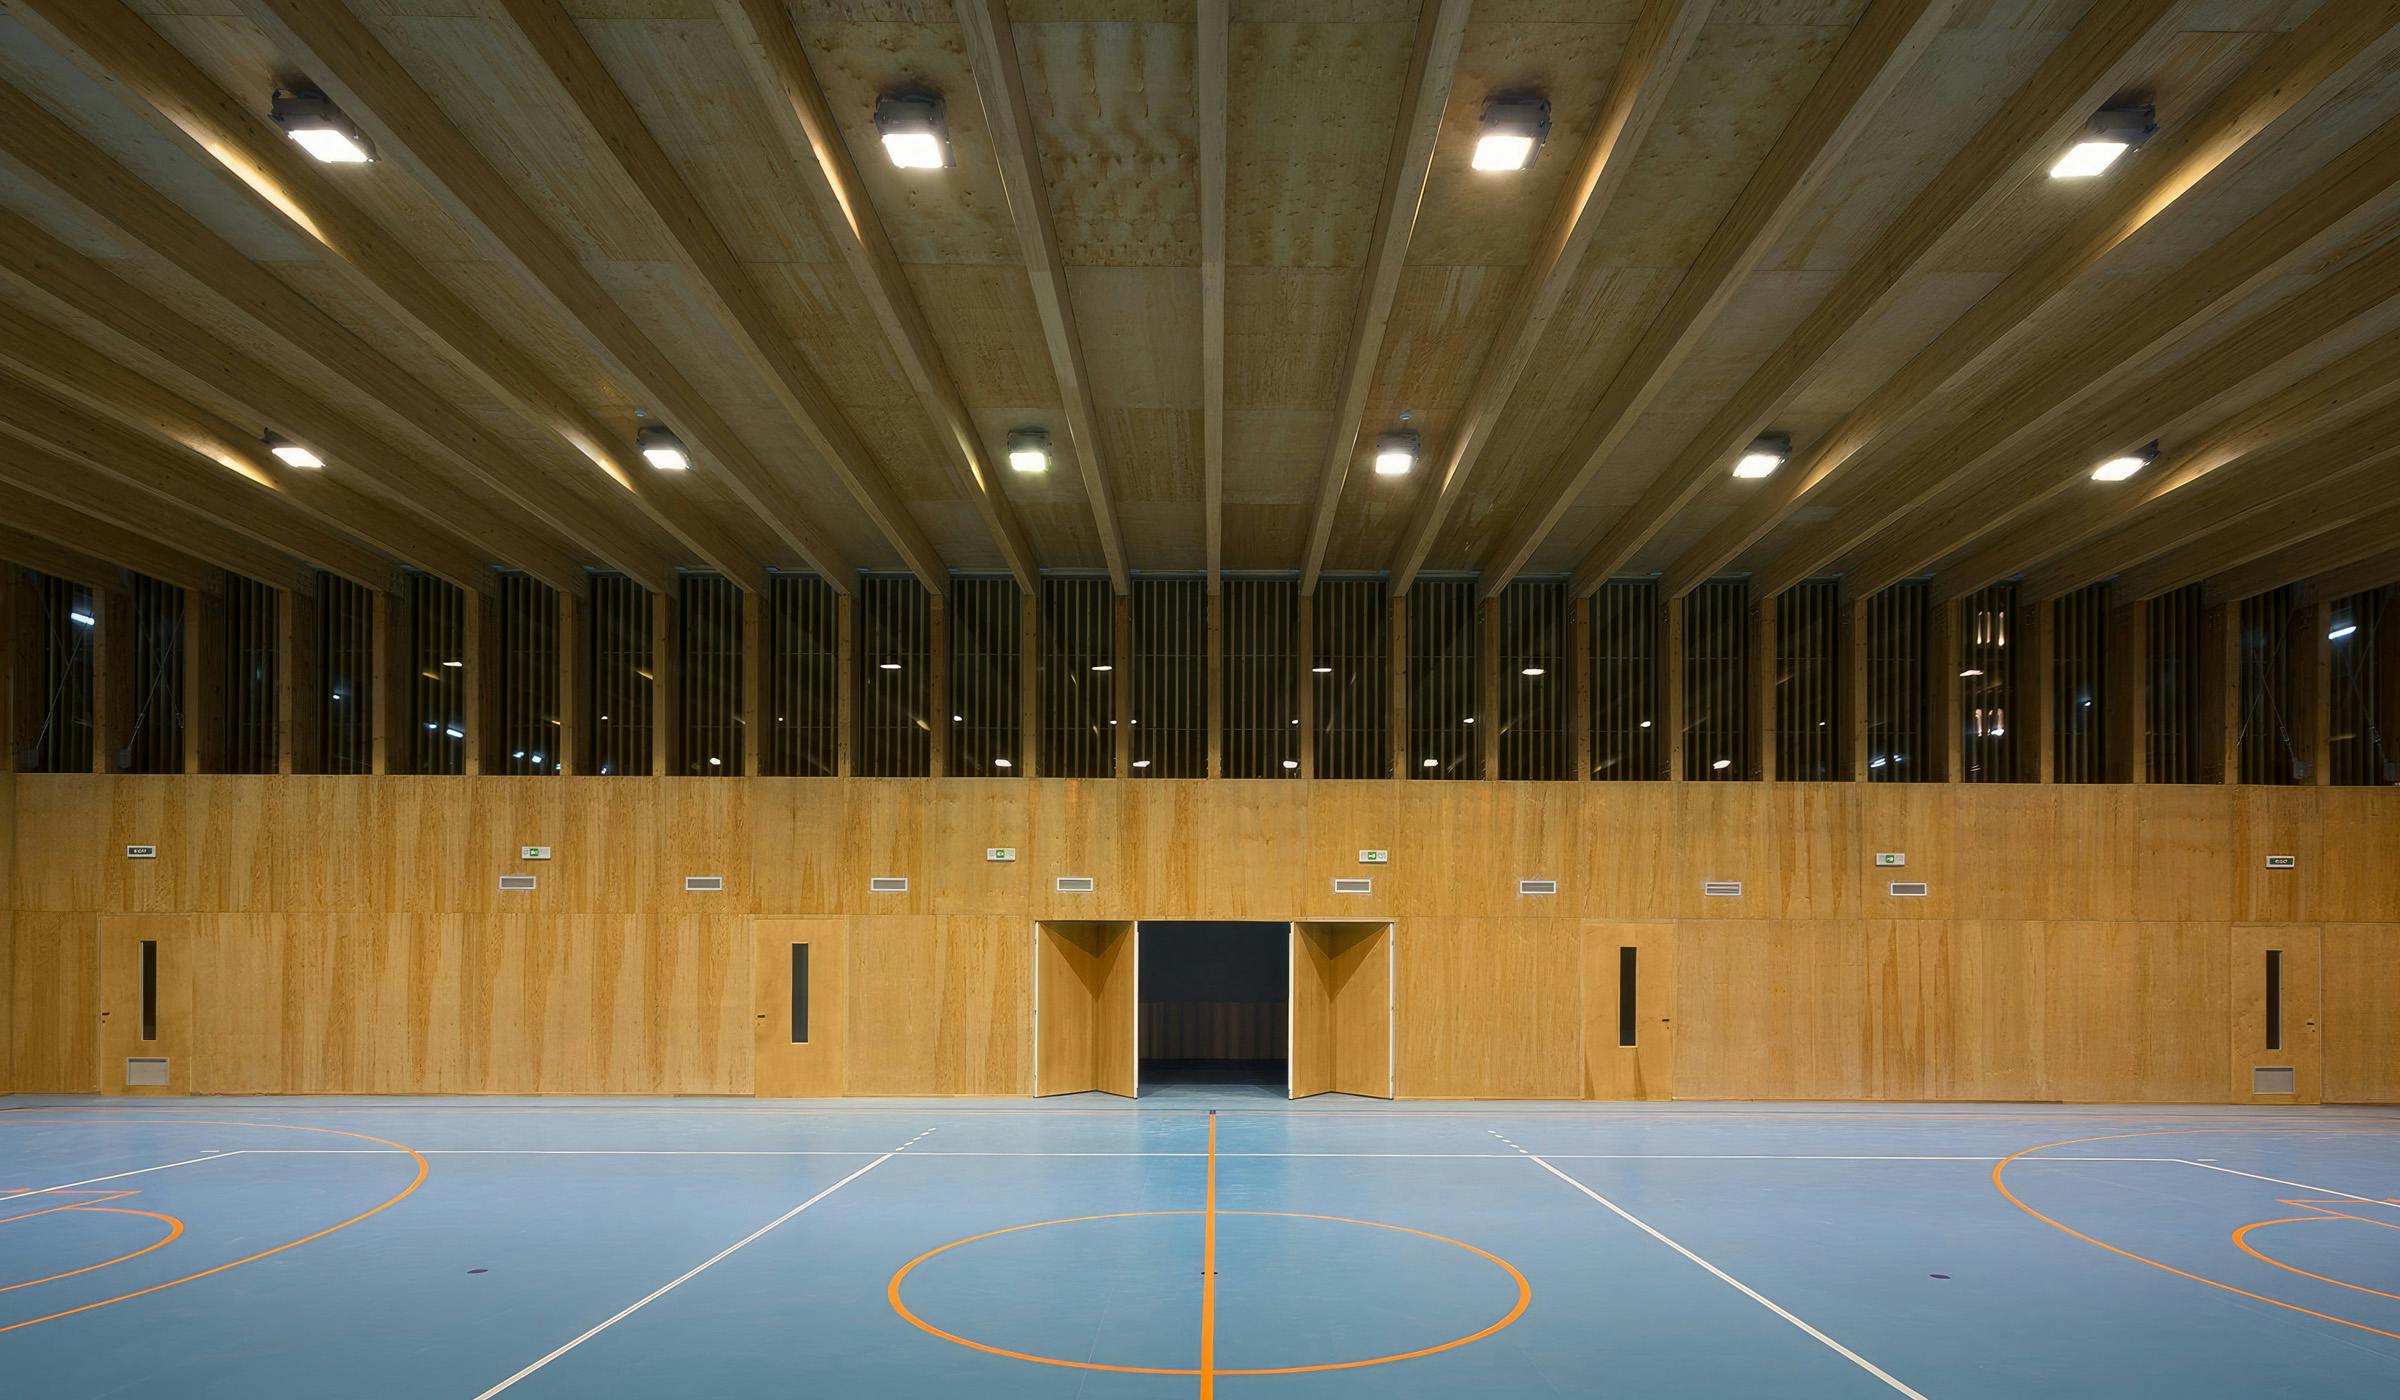 Matchbox Elementary School interior beams by Krivaja